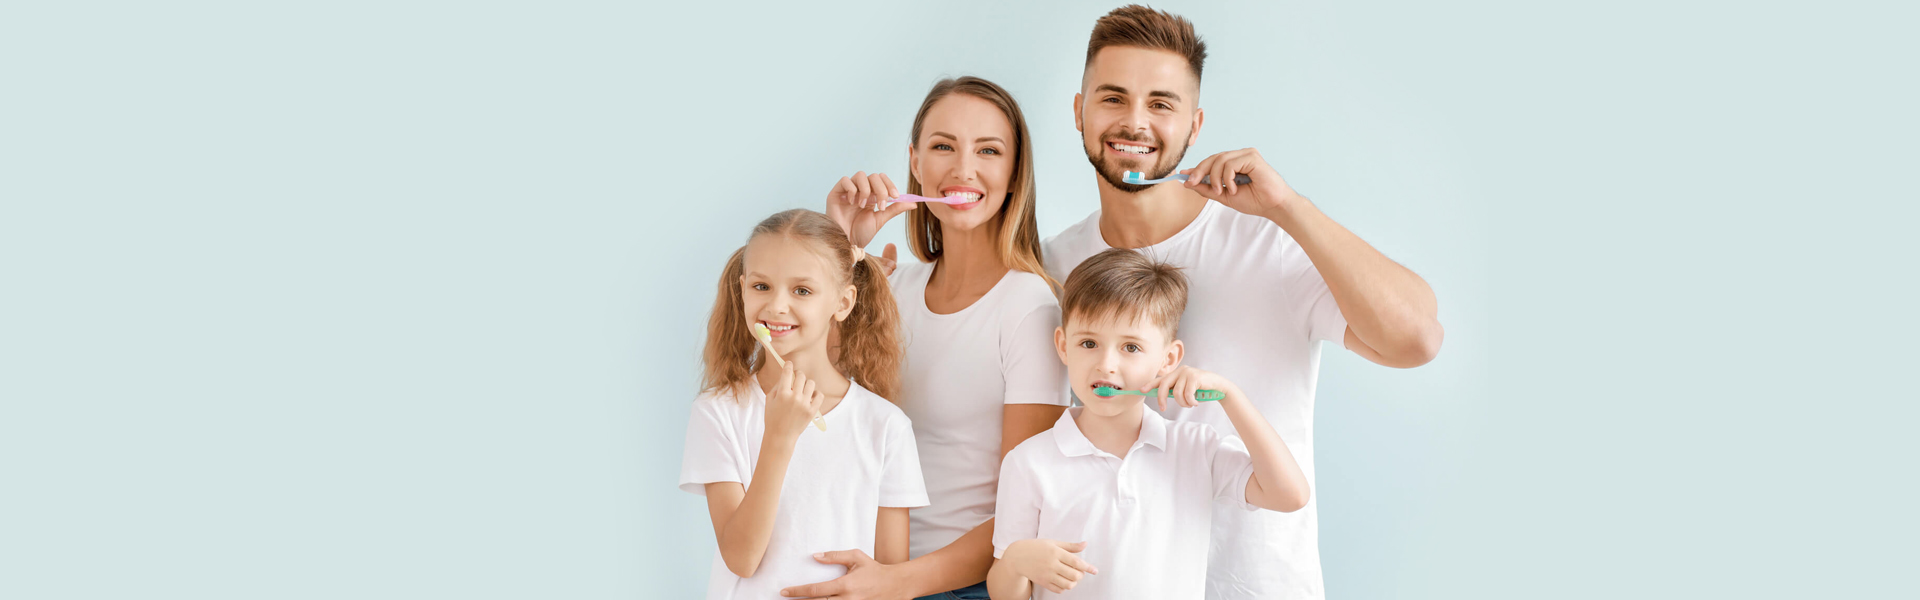 Discolored Teeth Impress No One: Consider Teeth Whitening